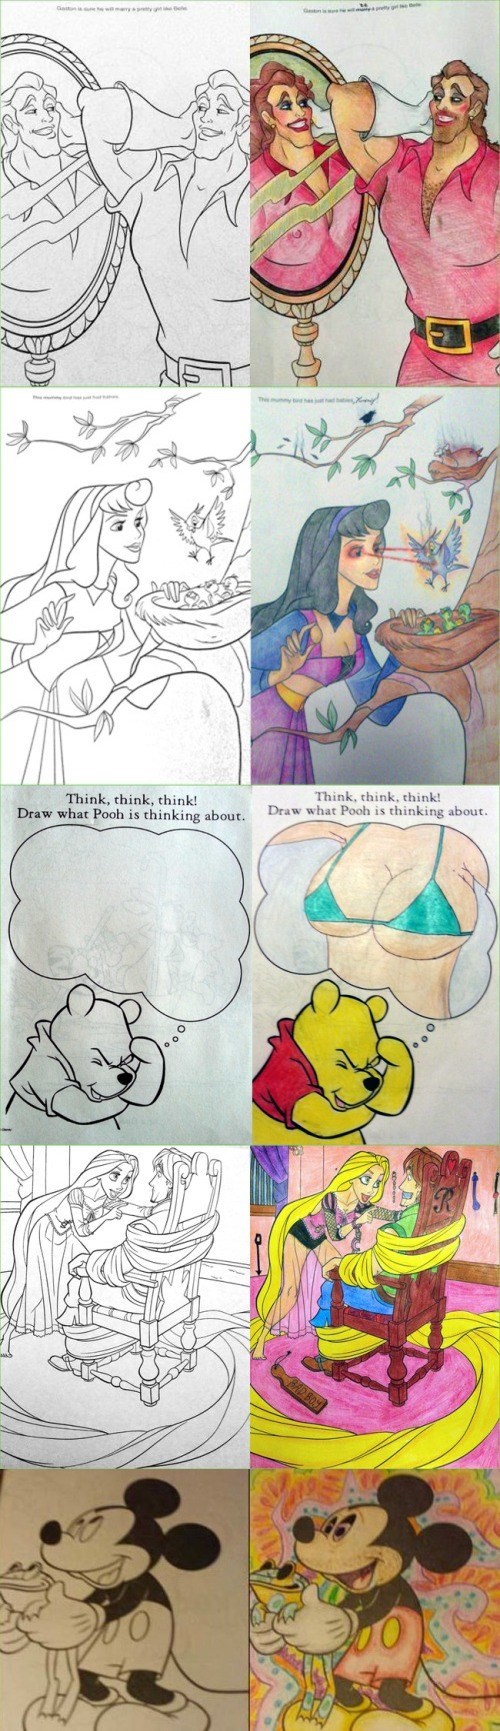 funny memes grown ups coloring book